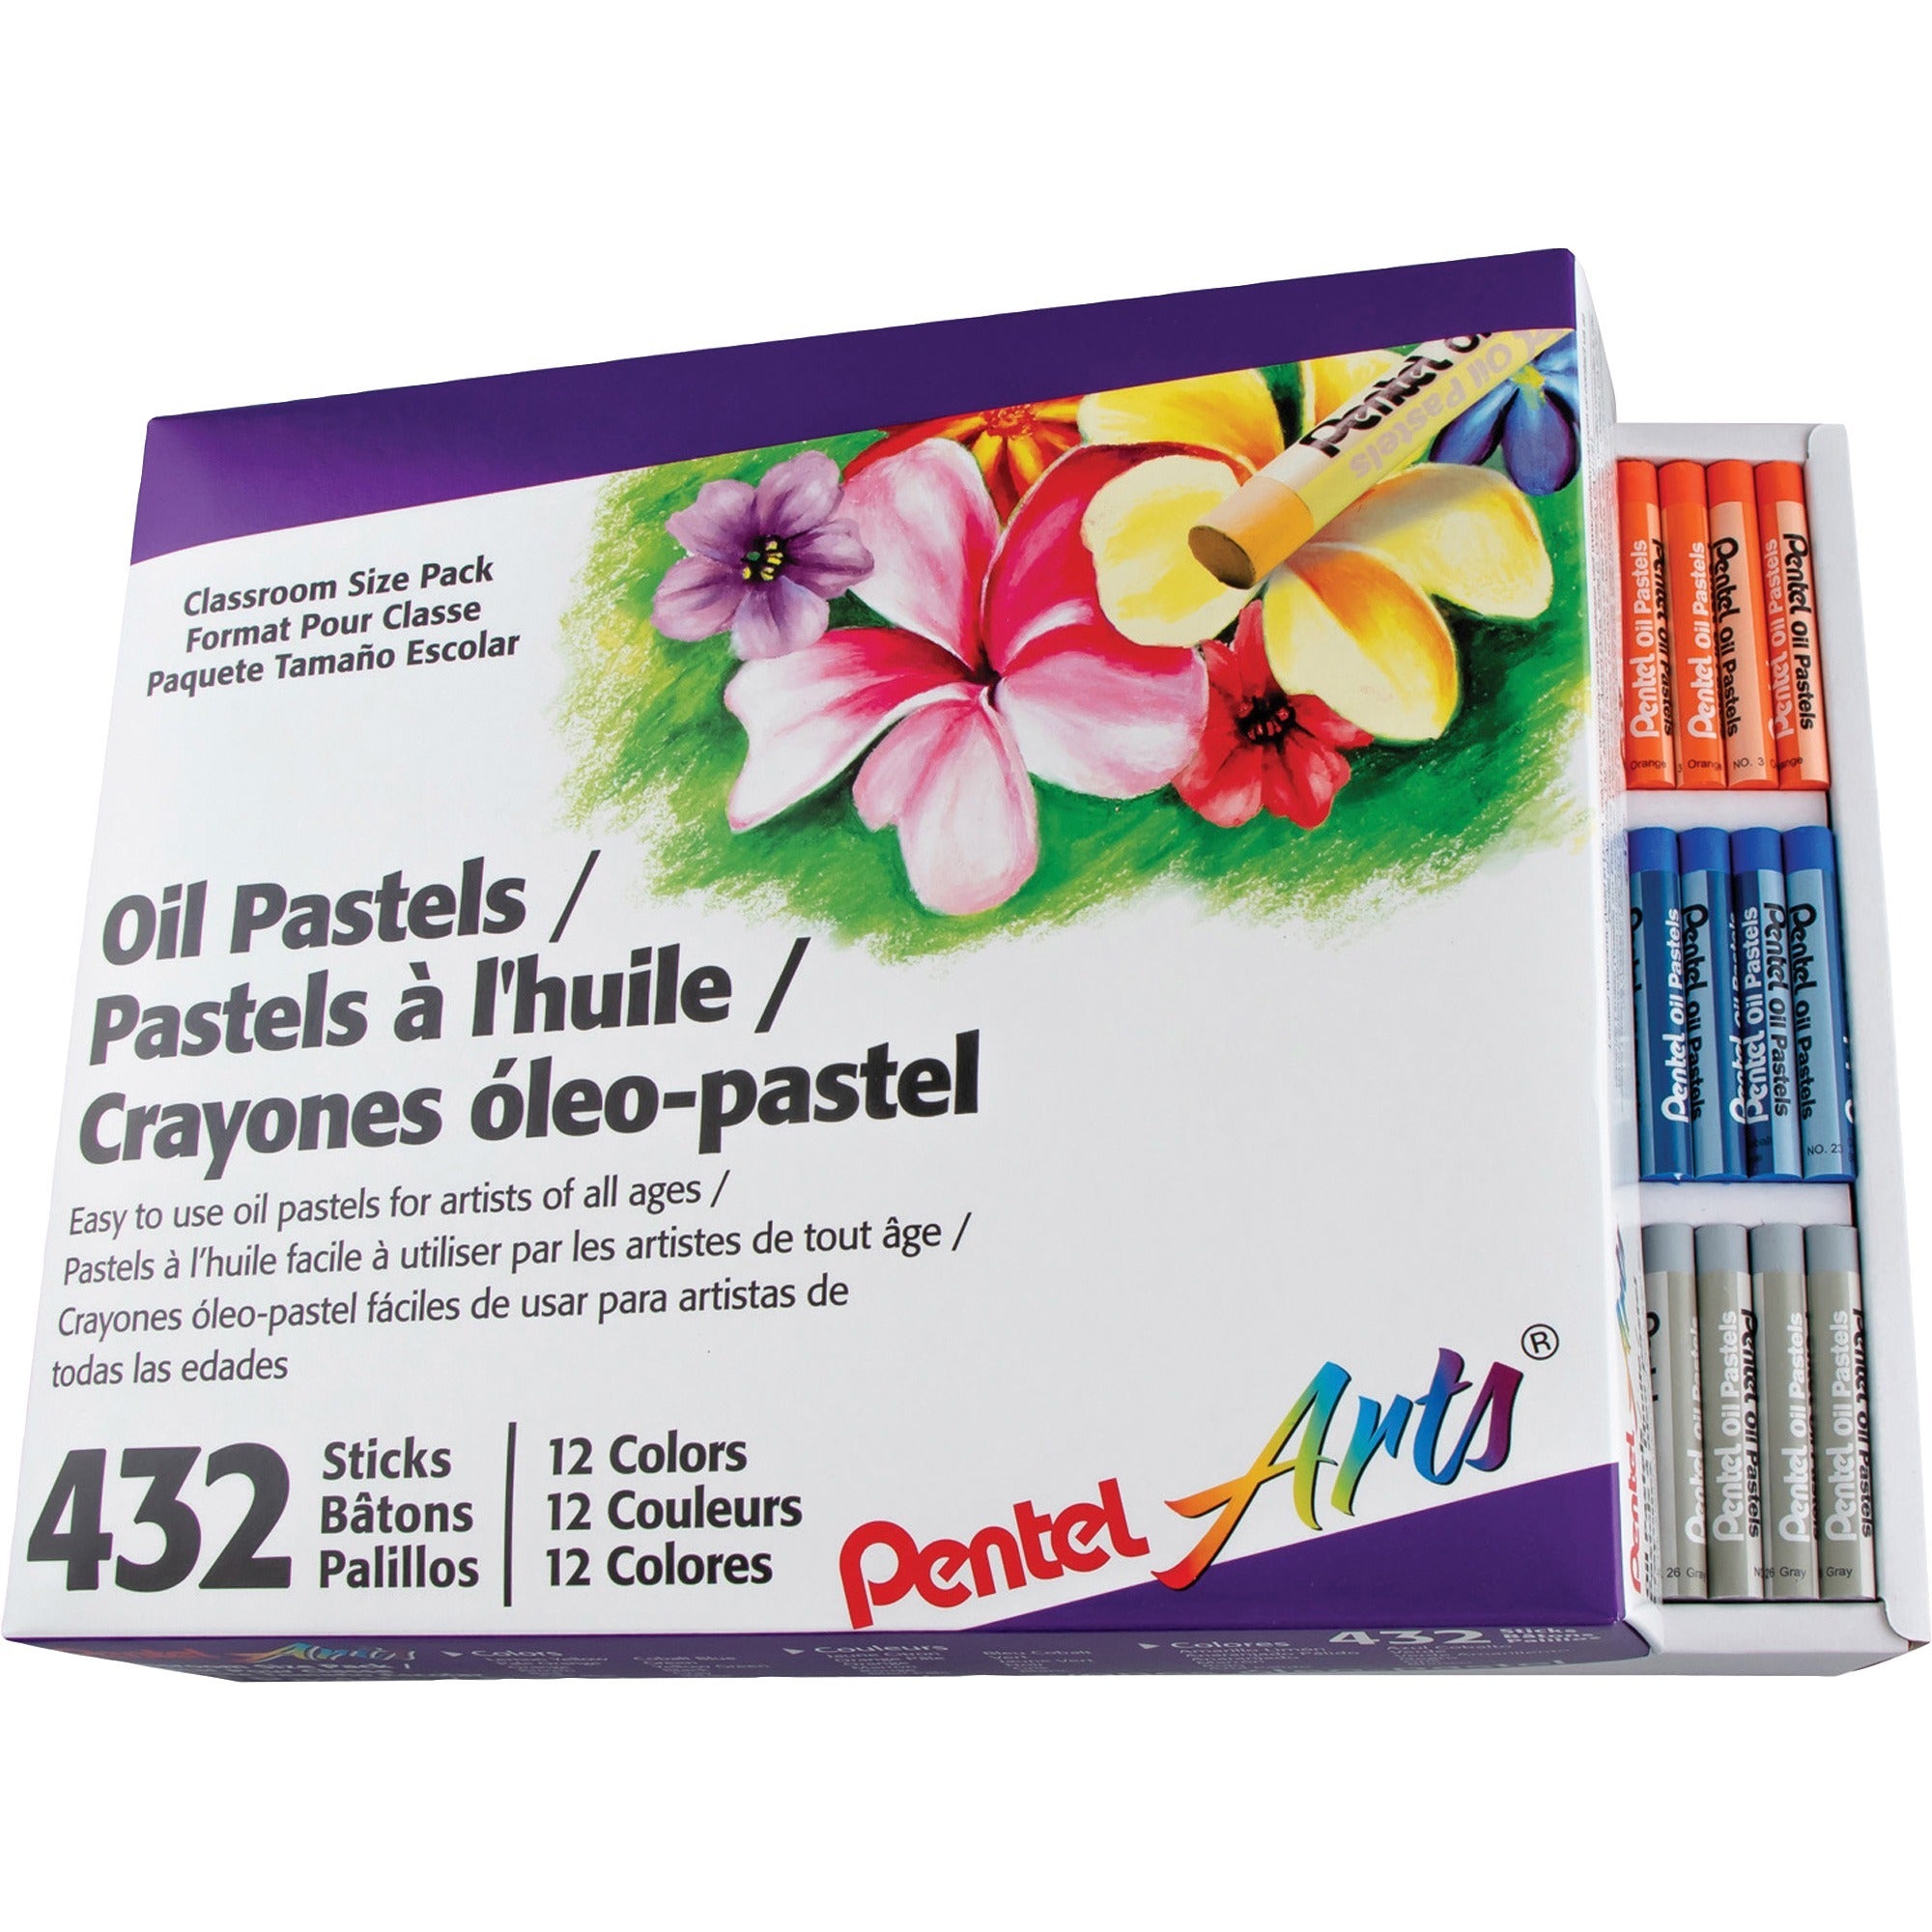 Pentel Arts Pentel Arts Oil Pastels - 2.4" Length - 0.4" Diameter - Black, Brown, Cobalt Blue, Gray, Green, Orange, White, Red, Pale Blue, Pale Orange, Lime Yellow, ... - 432 / Box - 